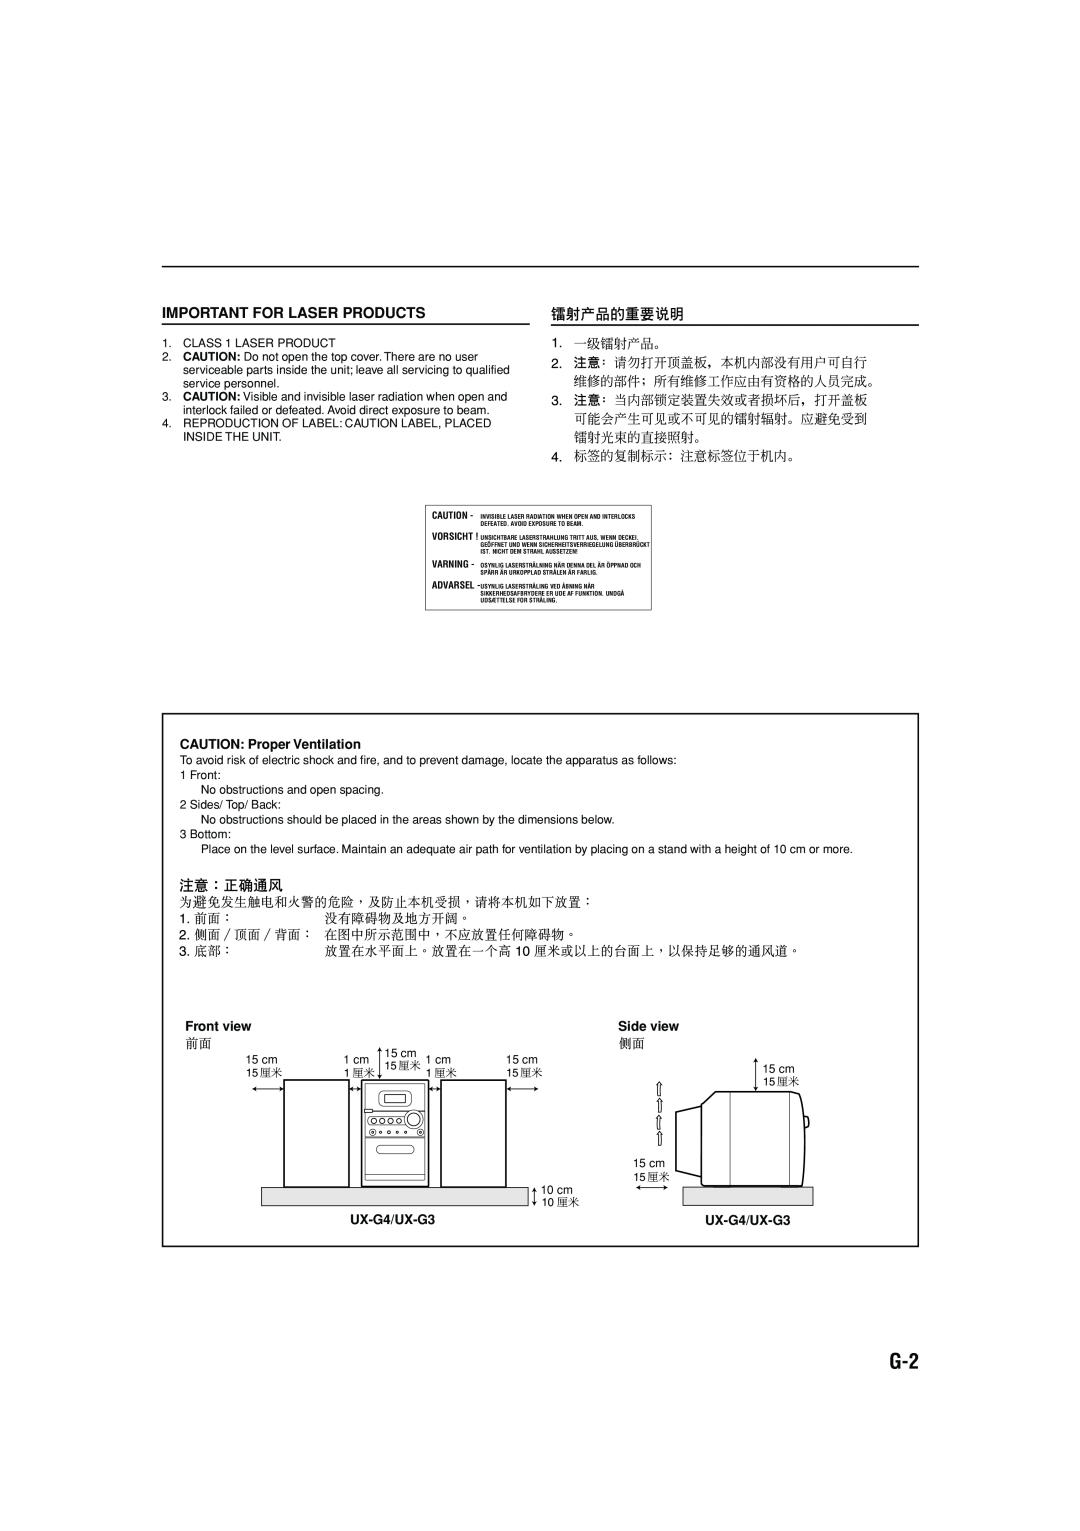 JVC LVT1364-006B manual Important For Laser Products, CAUTION: Proper Ventilation, Front view, Side view, UX-G4/UX-G3 